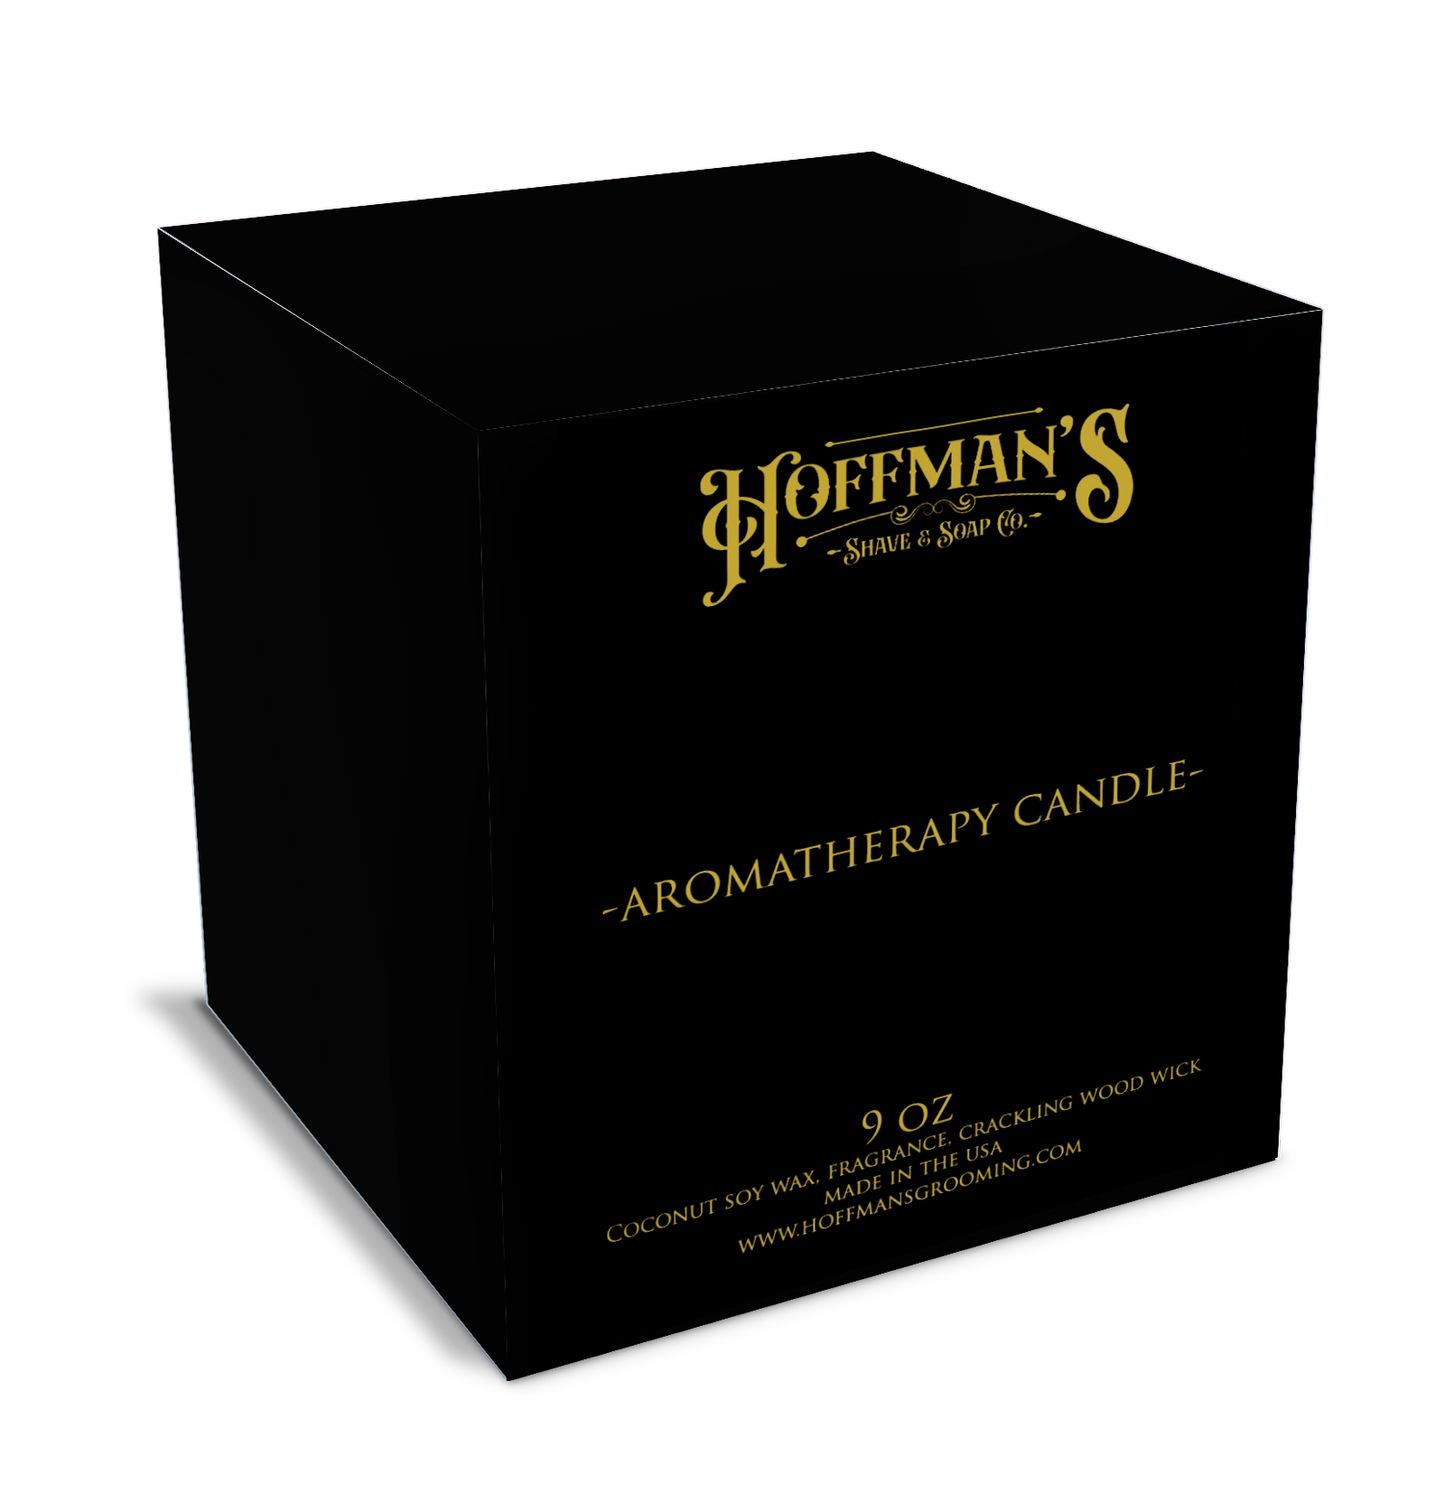 Hoffman's Grooming Bushido 9oz Aromatherapy Candle Box